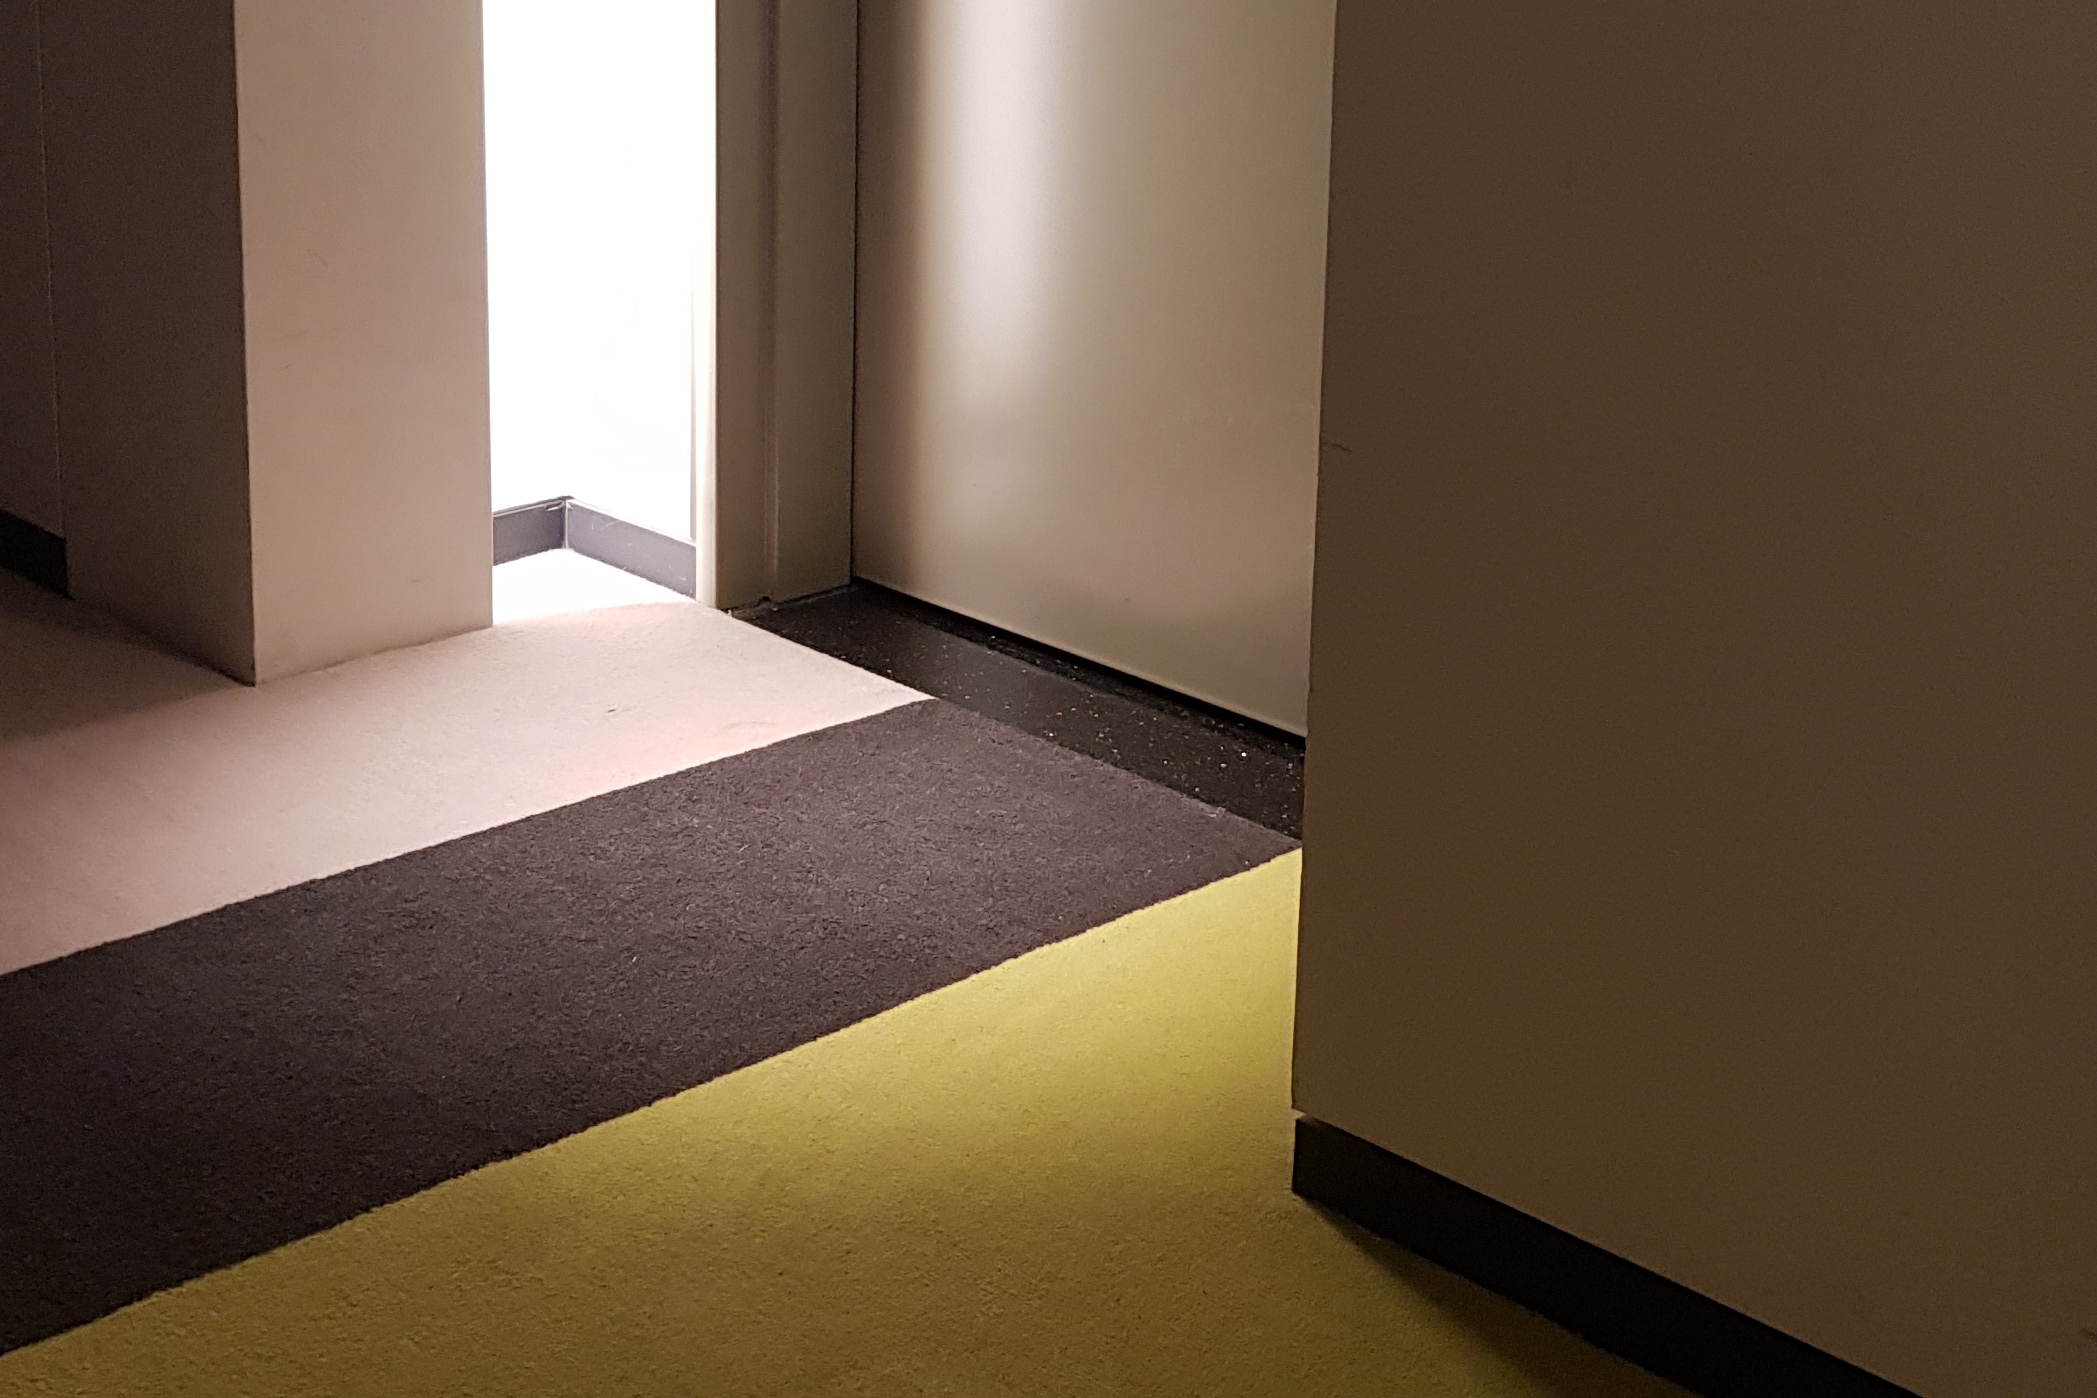 Guestroom doorway0 : Room entrance of the Ibis Styles Ambassador Seoul Yongsan with flat floor
